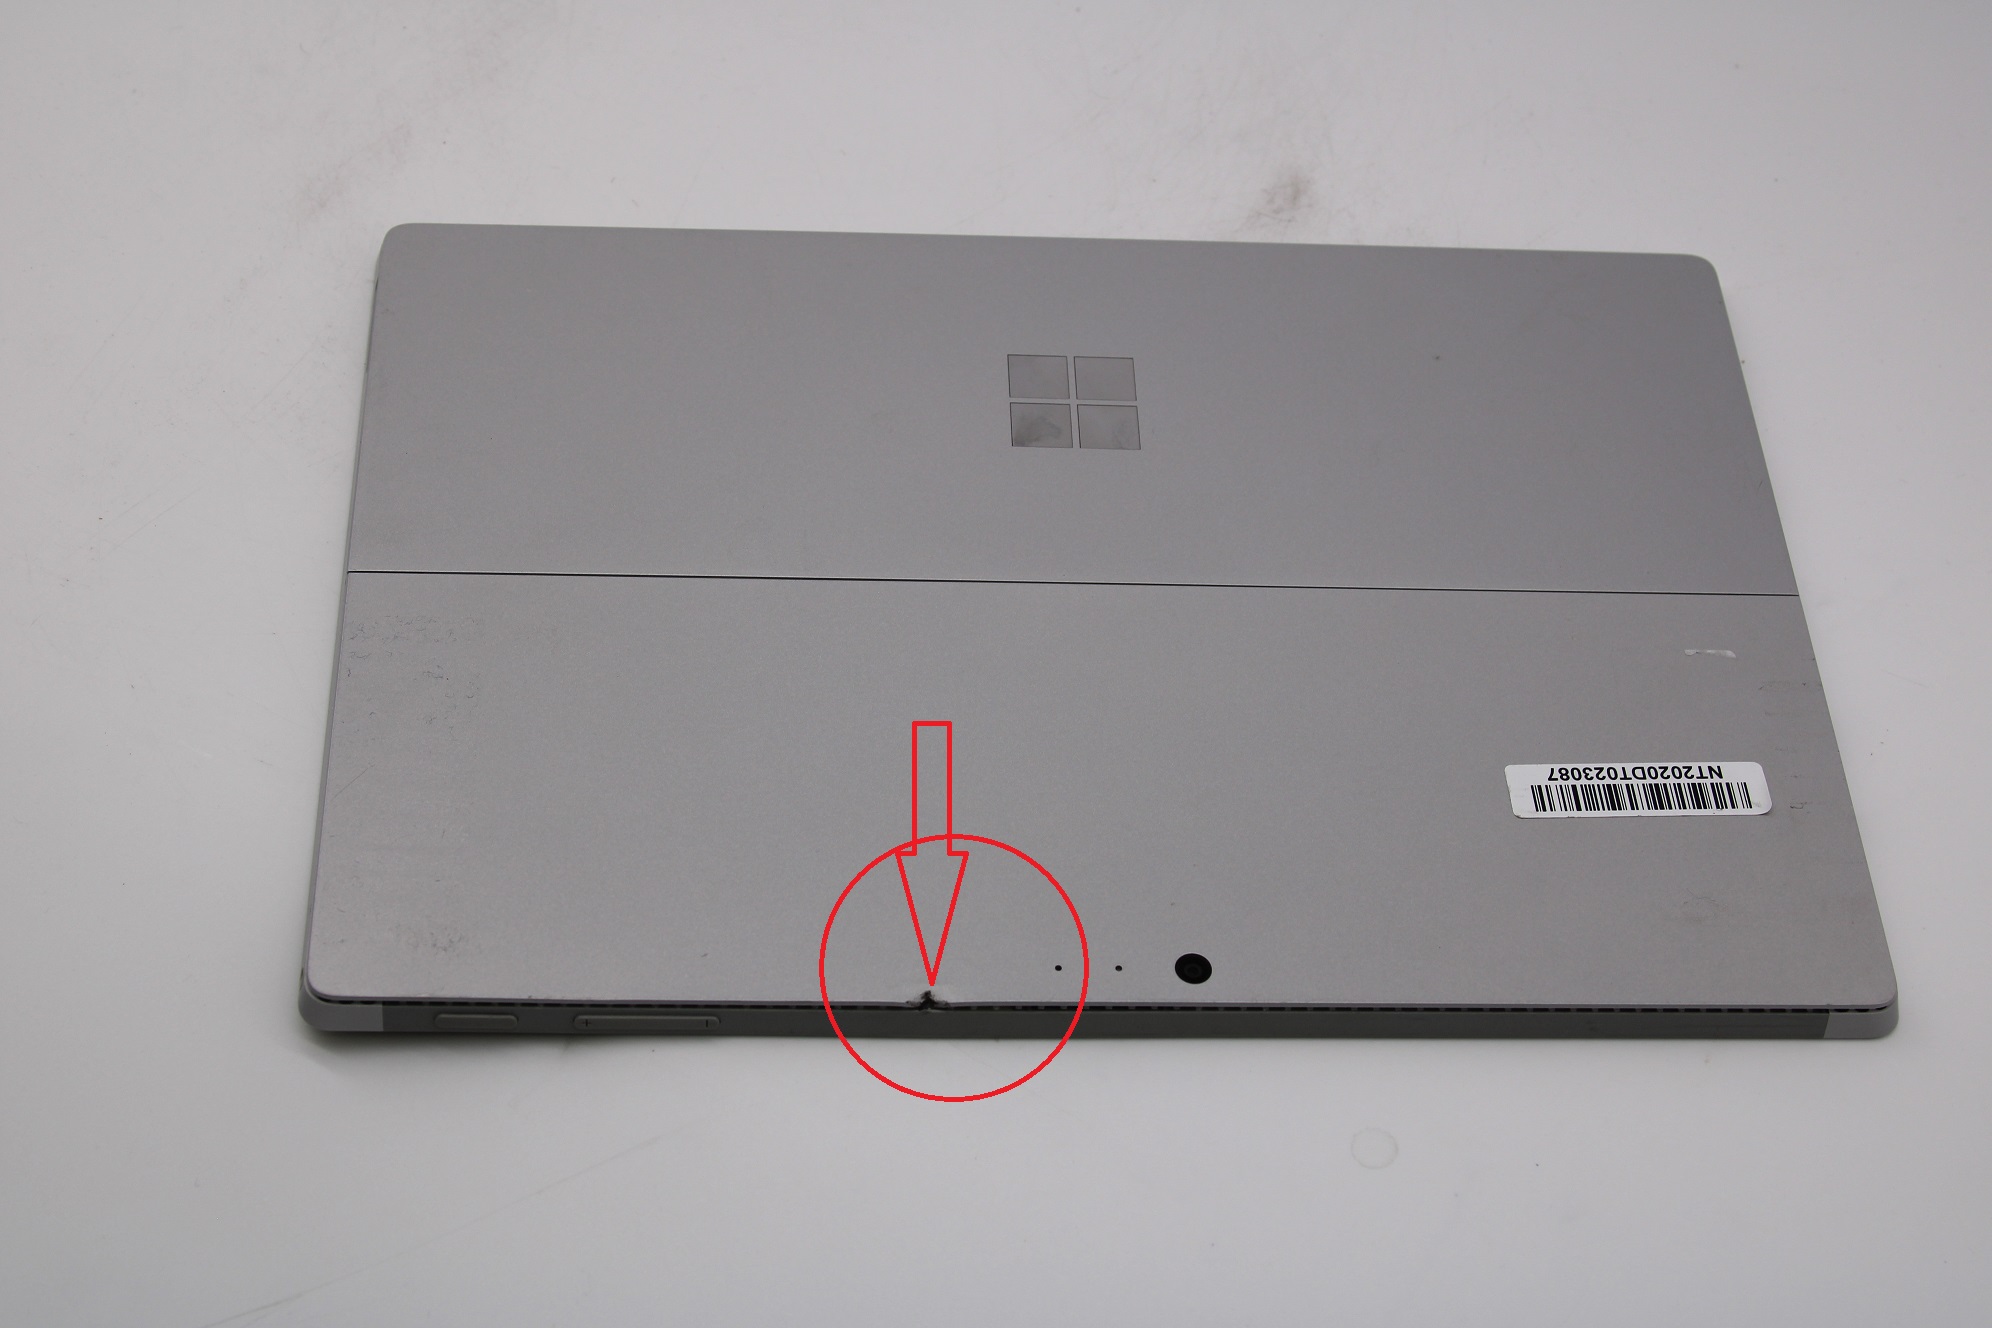 Microsoft Surface Pro 4 1724 Intel I5-6300U 2.2Ghz 8GB RAM 256GB SSD Win10 Pro